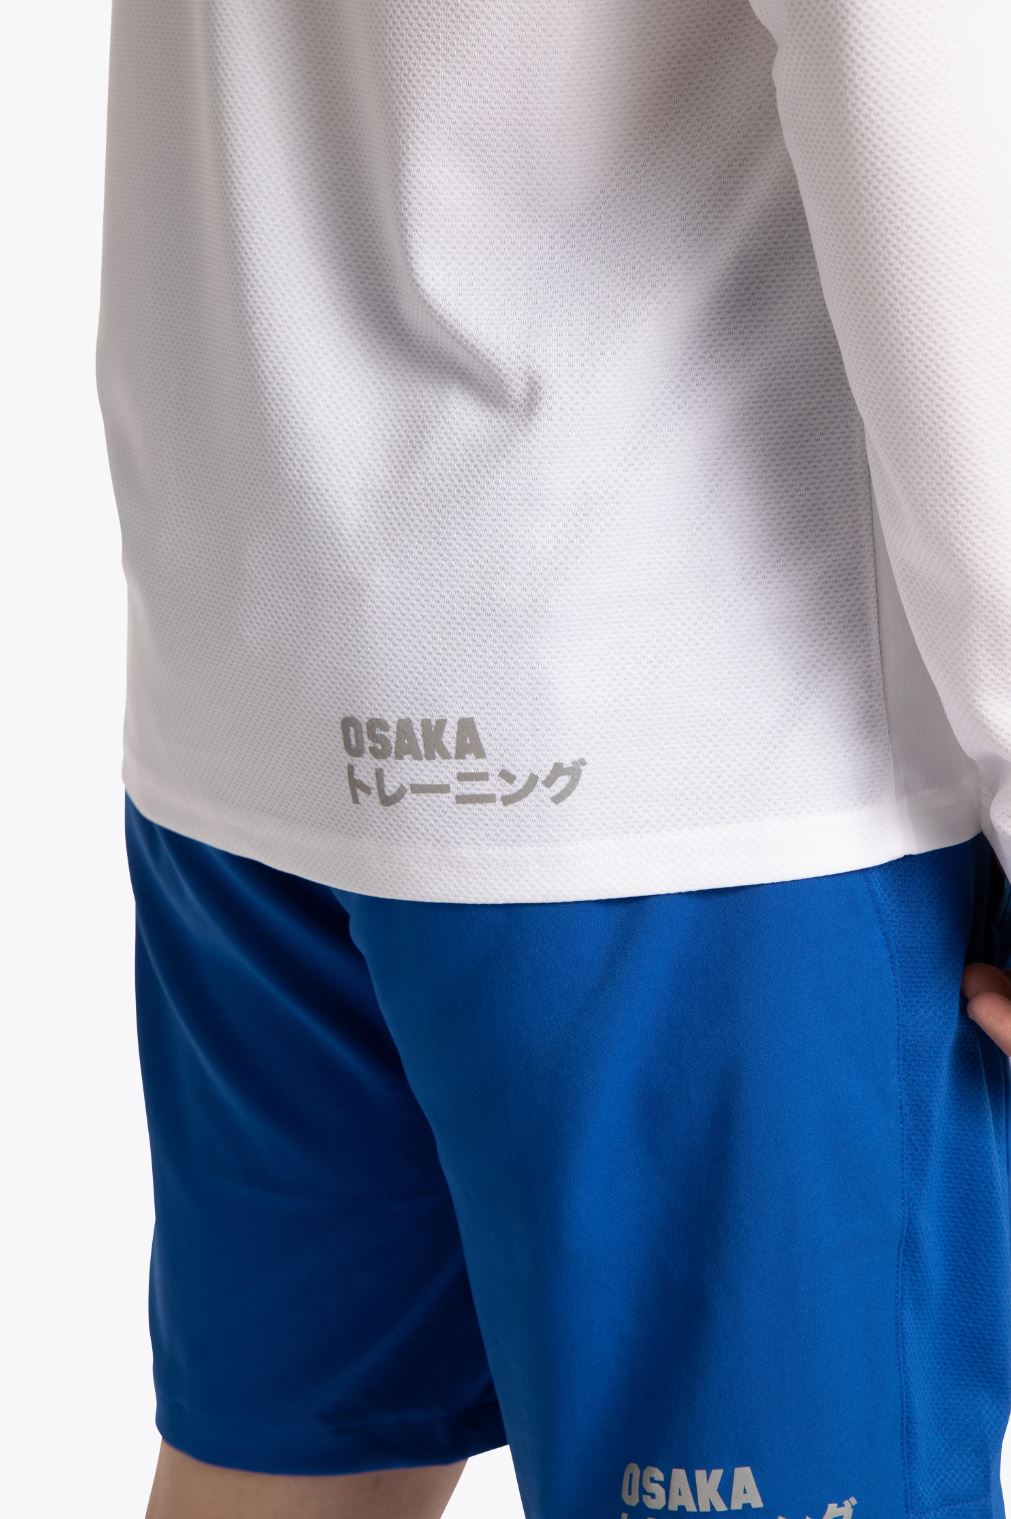 Osaka Men's Training Tee Long Sleeve (Hvid)